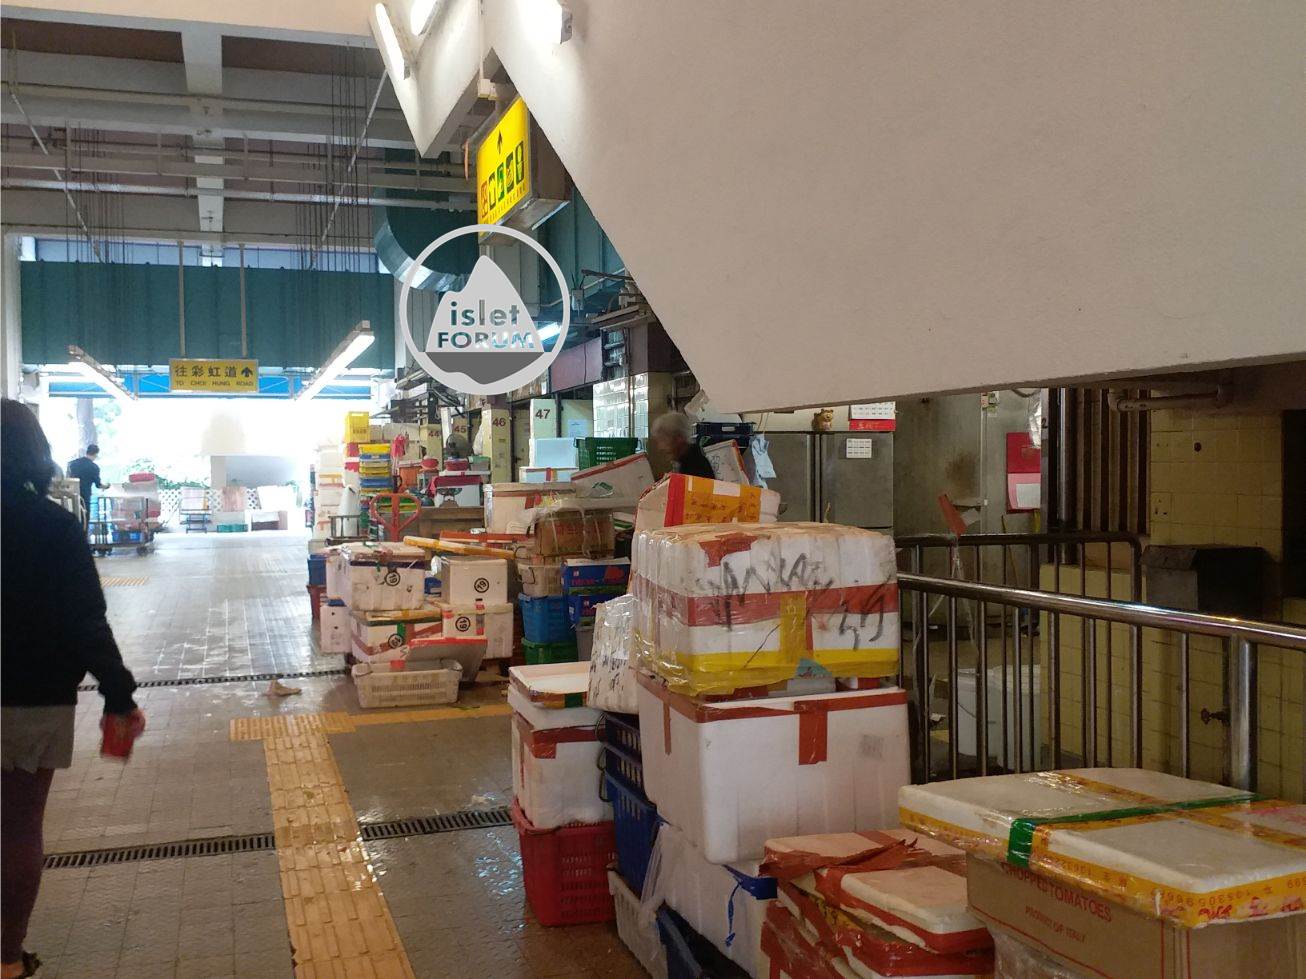 彩虹道街市choi hung road market (19).jpg